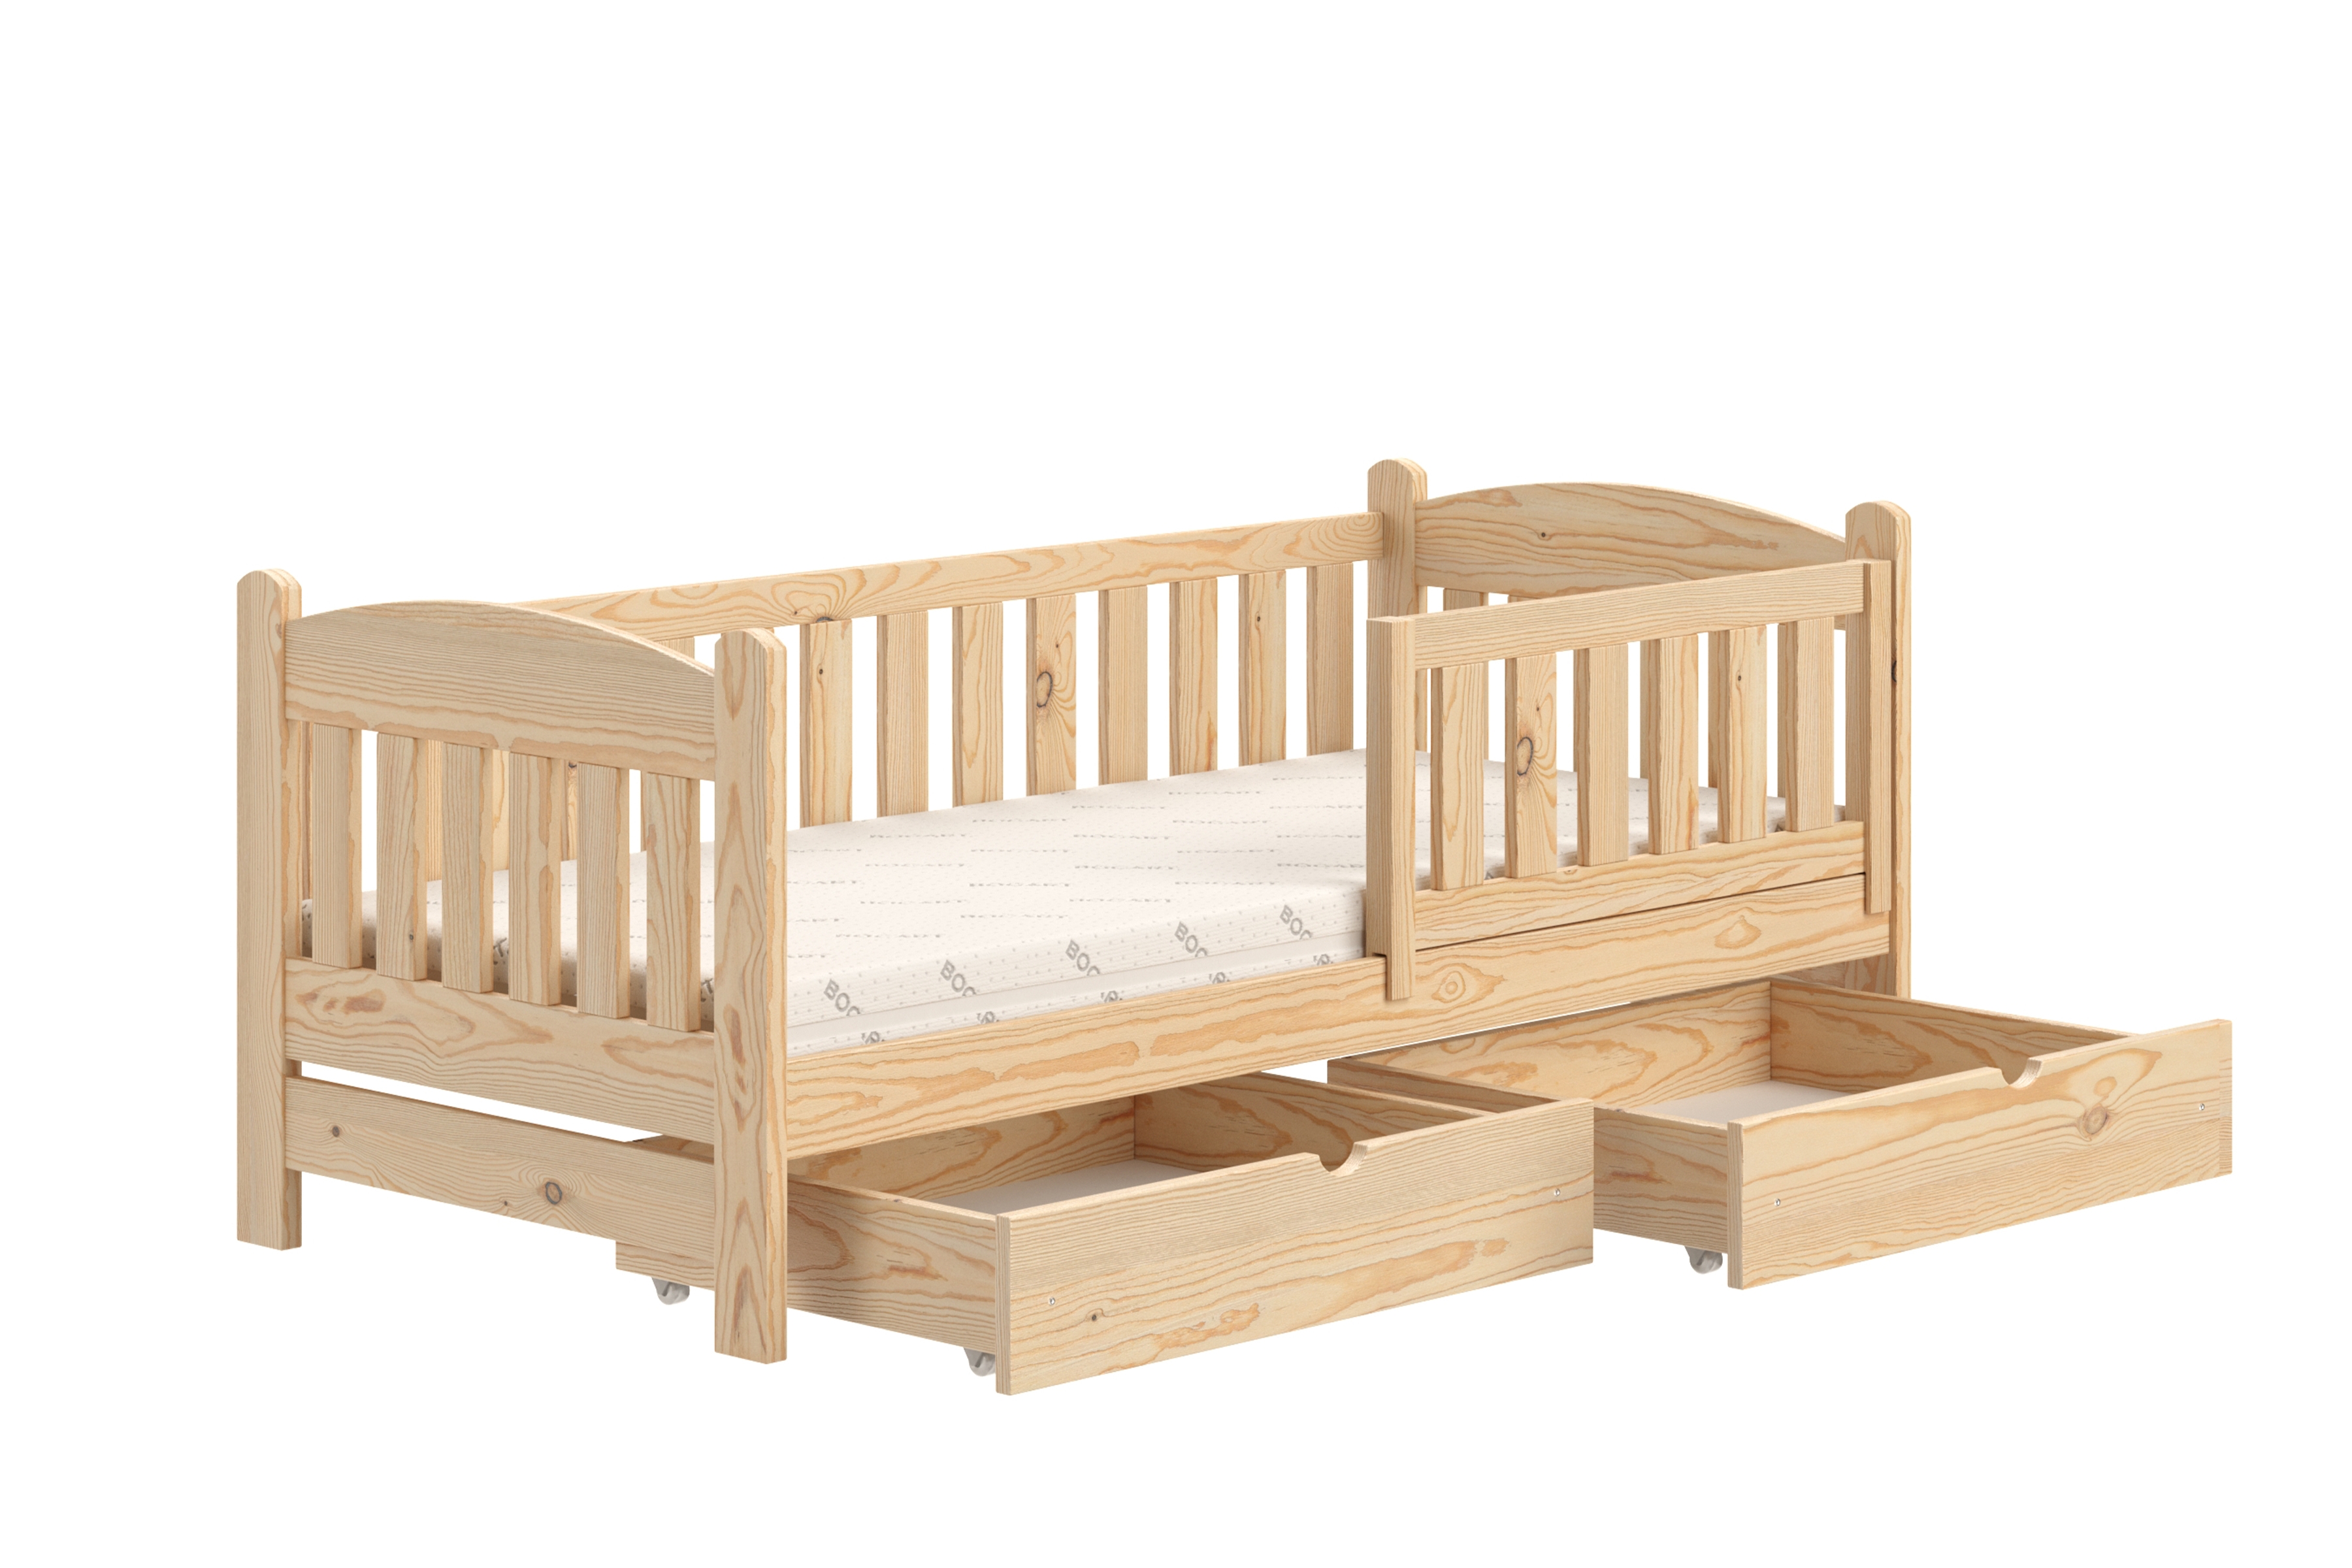 Dřevěná dětská postel Alvins DP 002 80x180 - borovice Łóżko dziecięce drewniane Alvins z szufladami - 80x180 / sosna